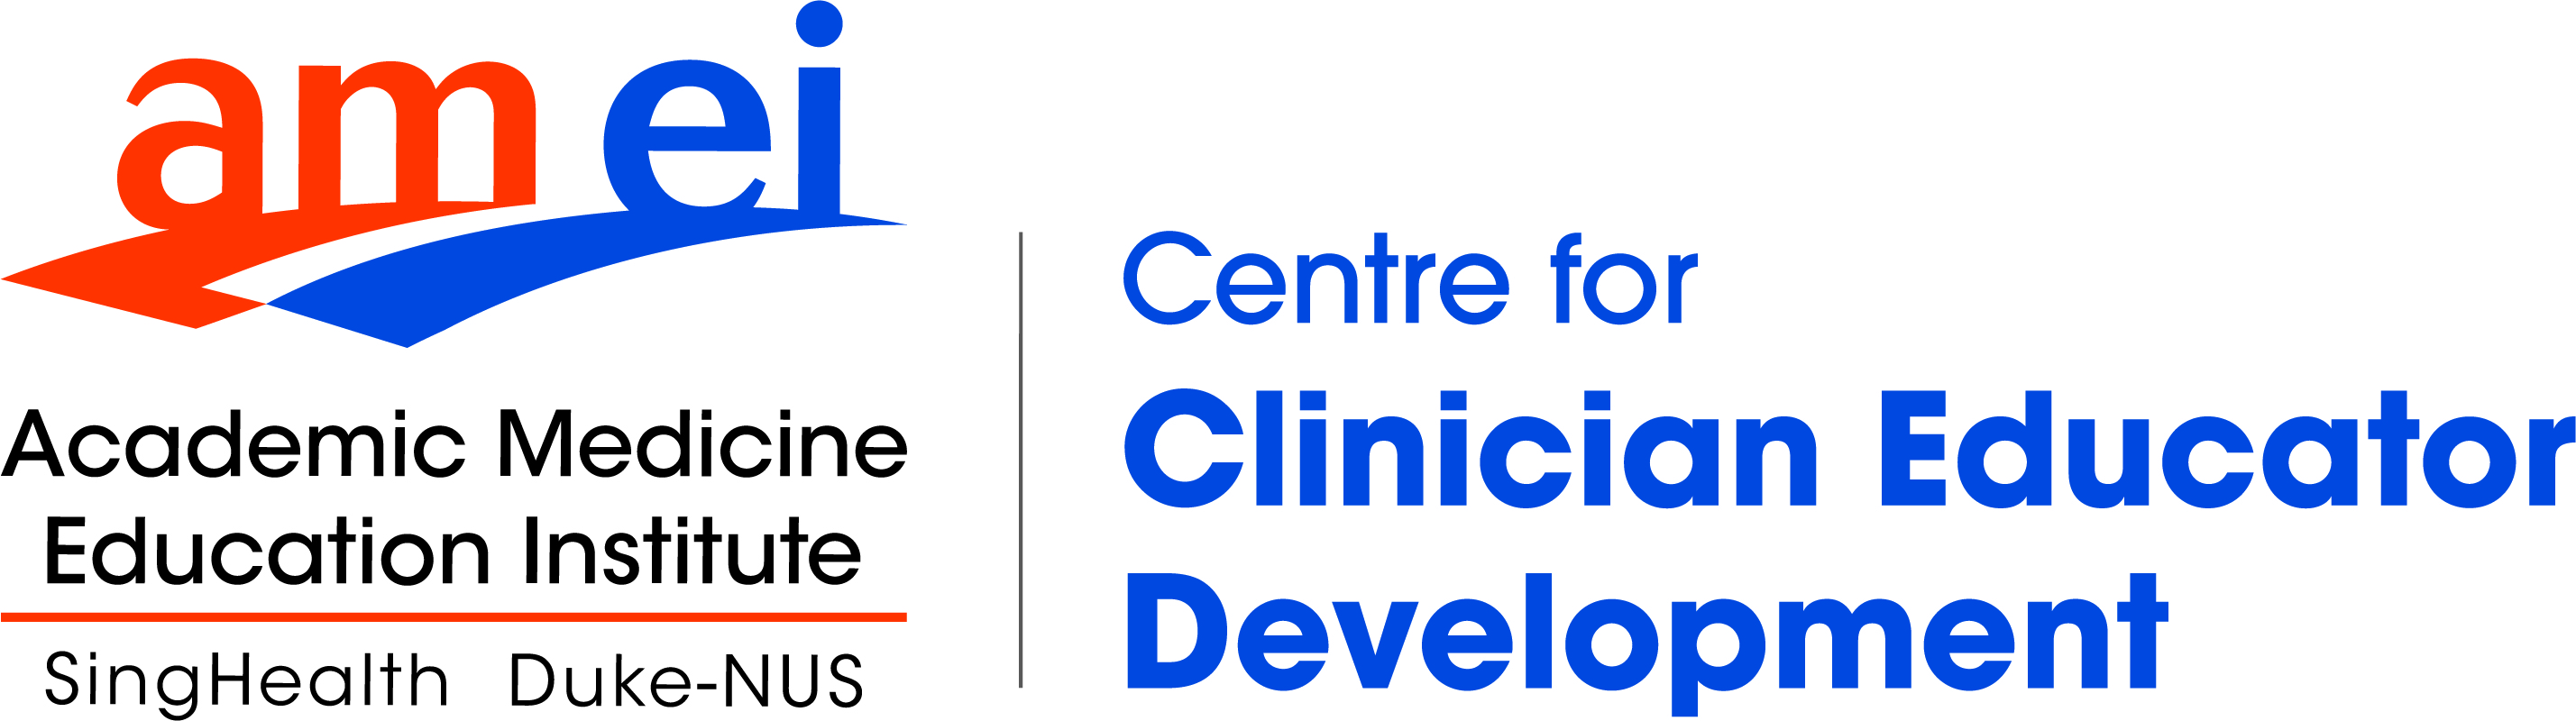 Centre for Clinician Educator Development.jpg